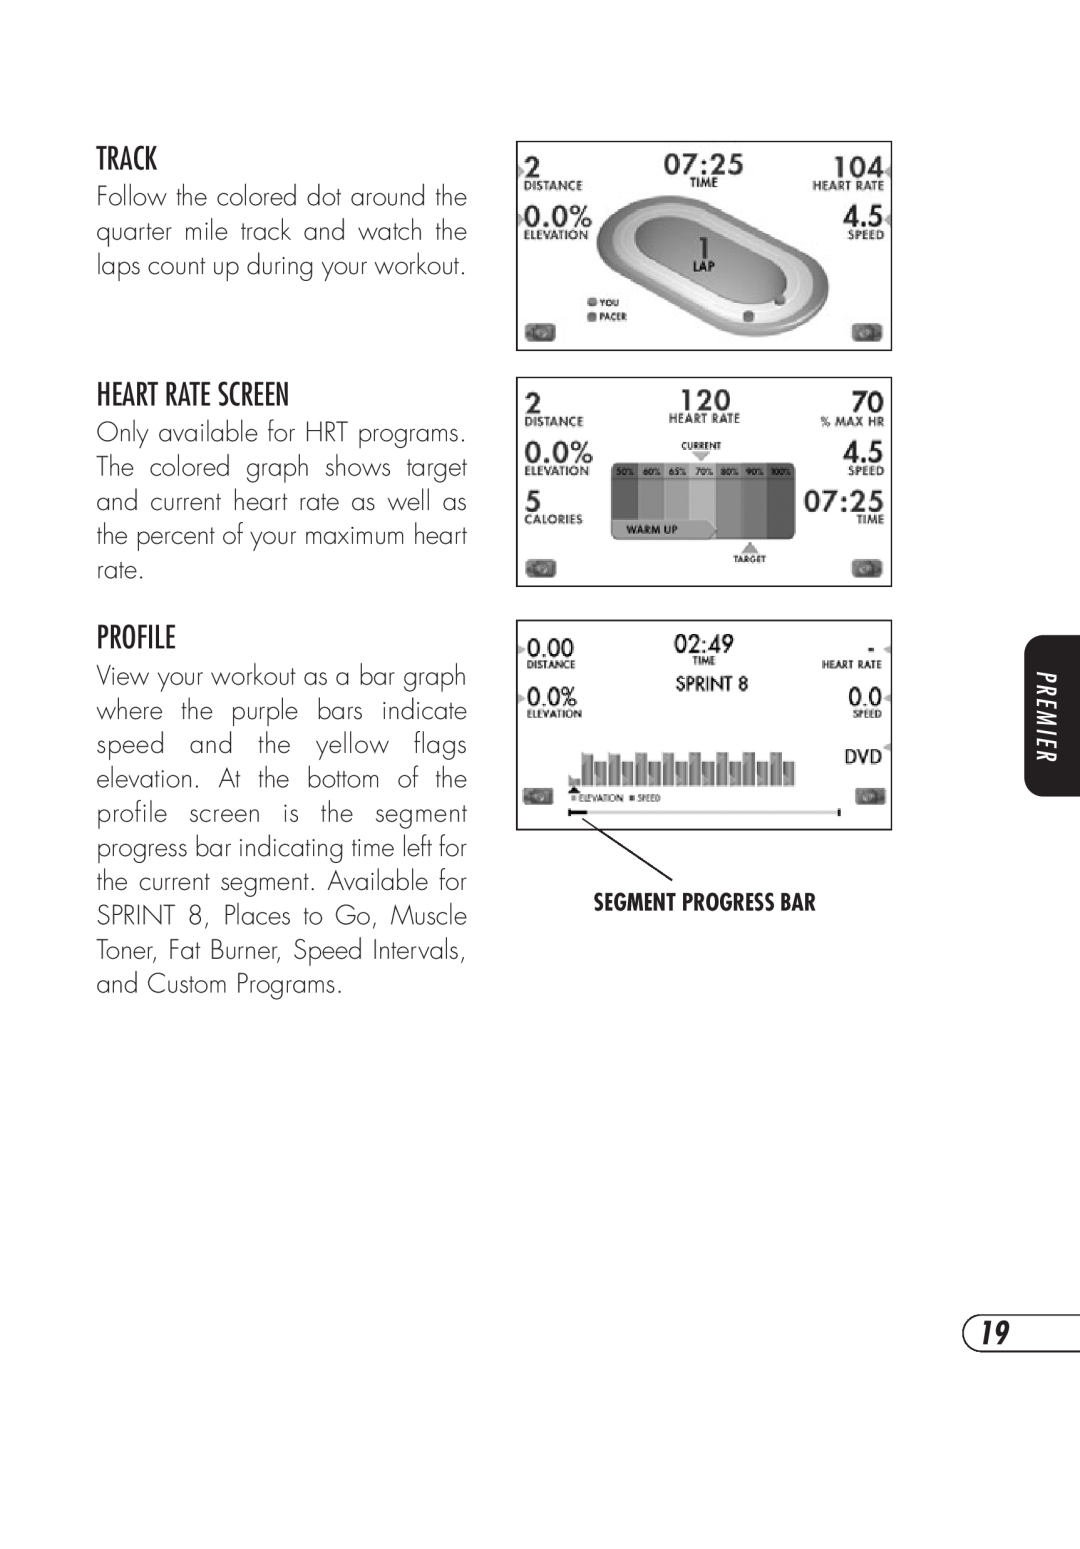 Vision Fitness TM357 manual Track, Heart Rate Screen, Profile, P R E M I E R, Segment Progress Bar 